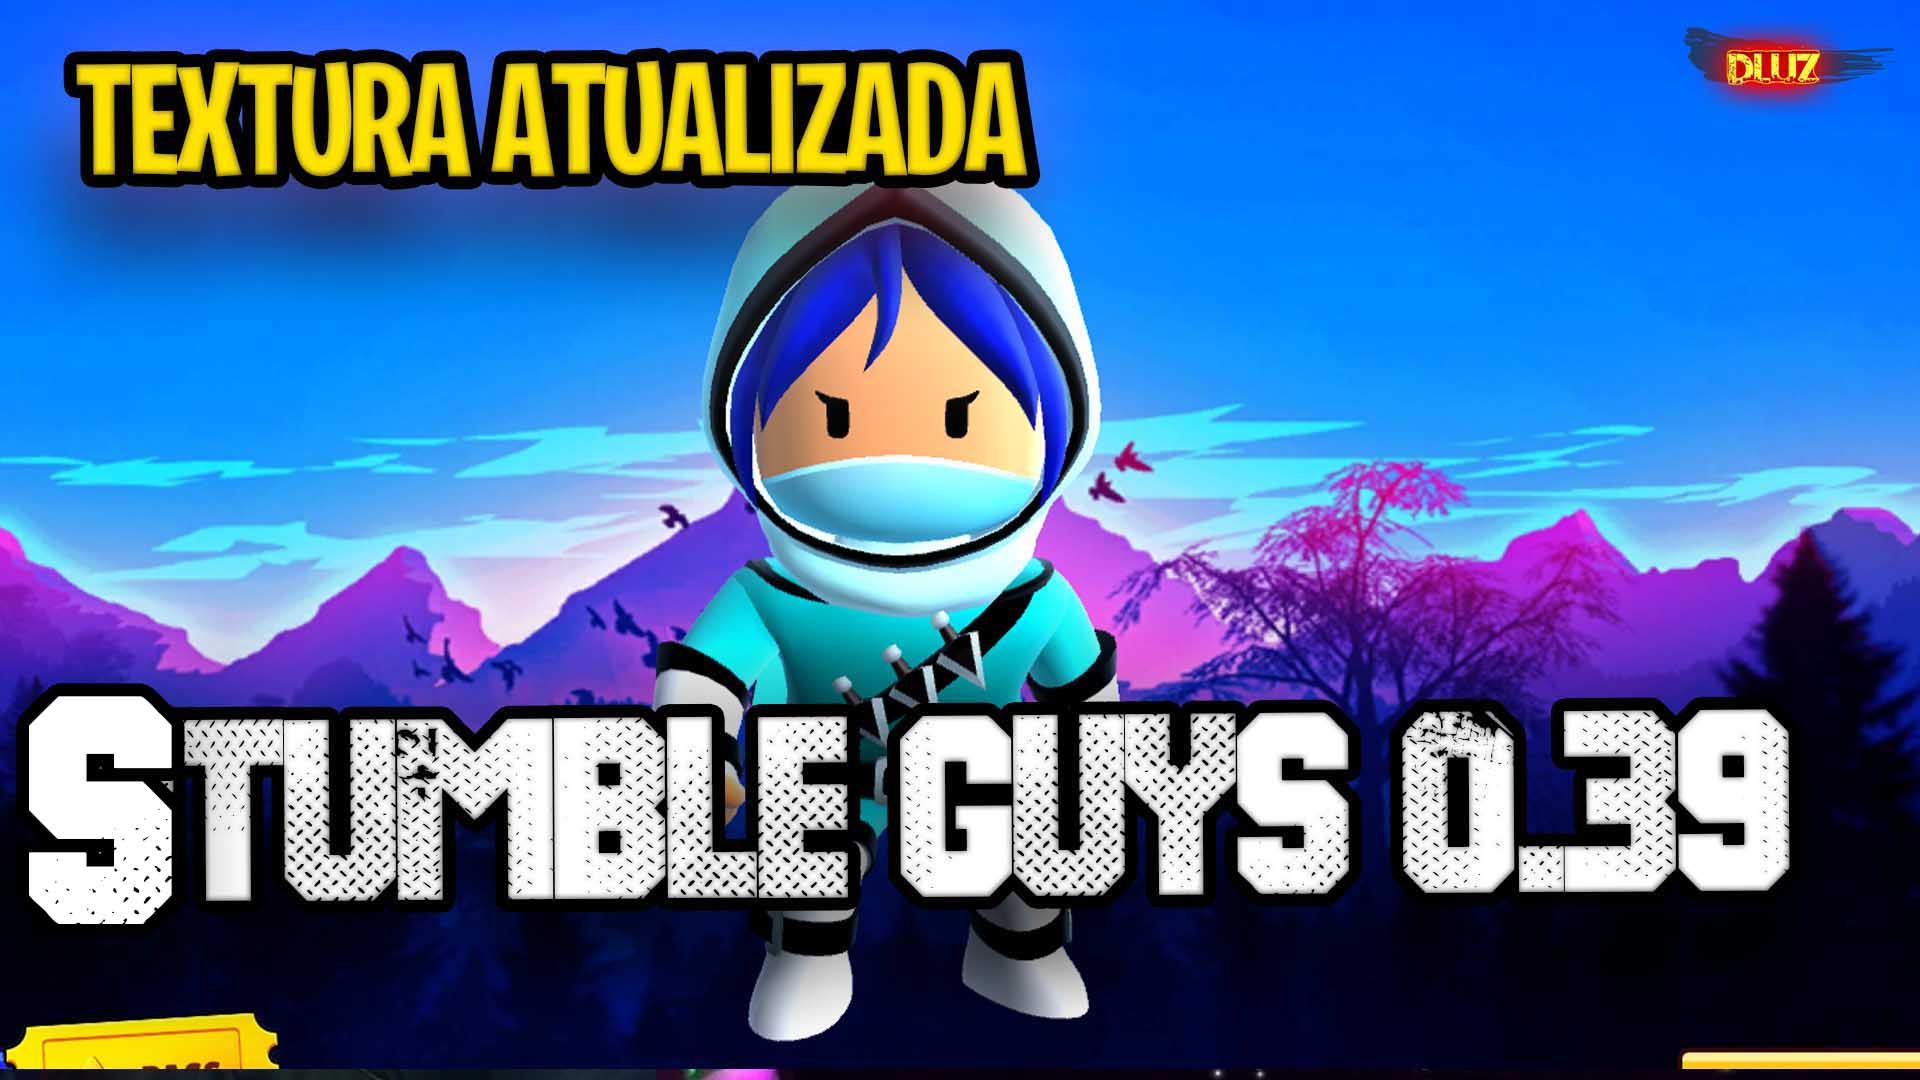 Stumble Guys 0.41.1 versão oficial - Dluz Games